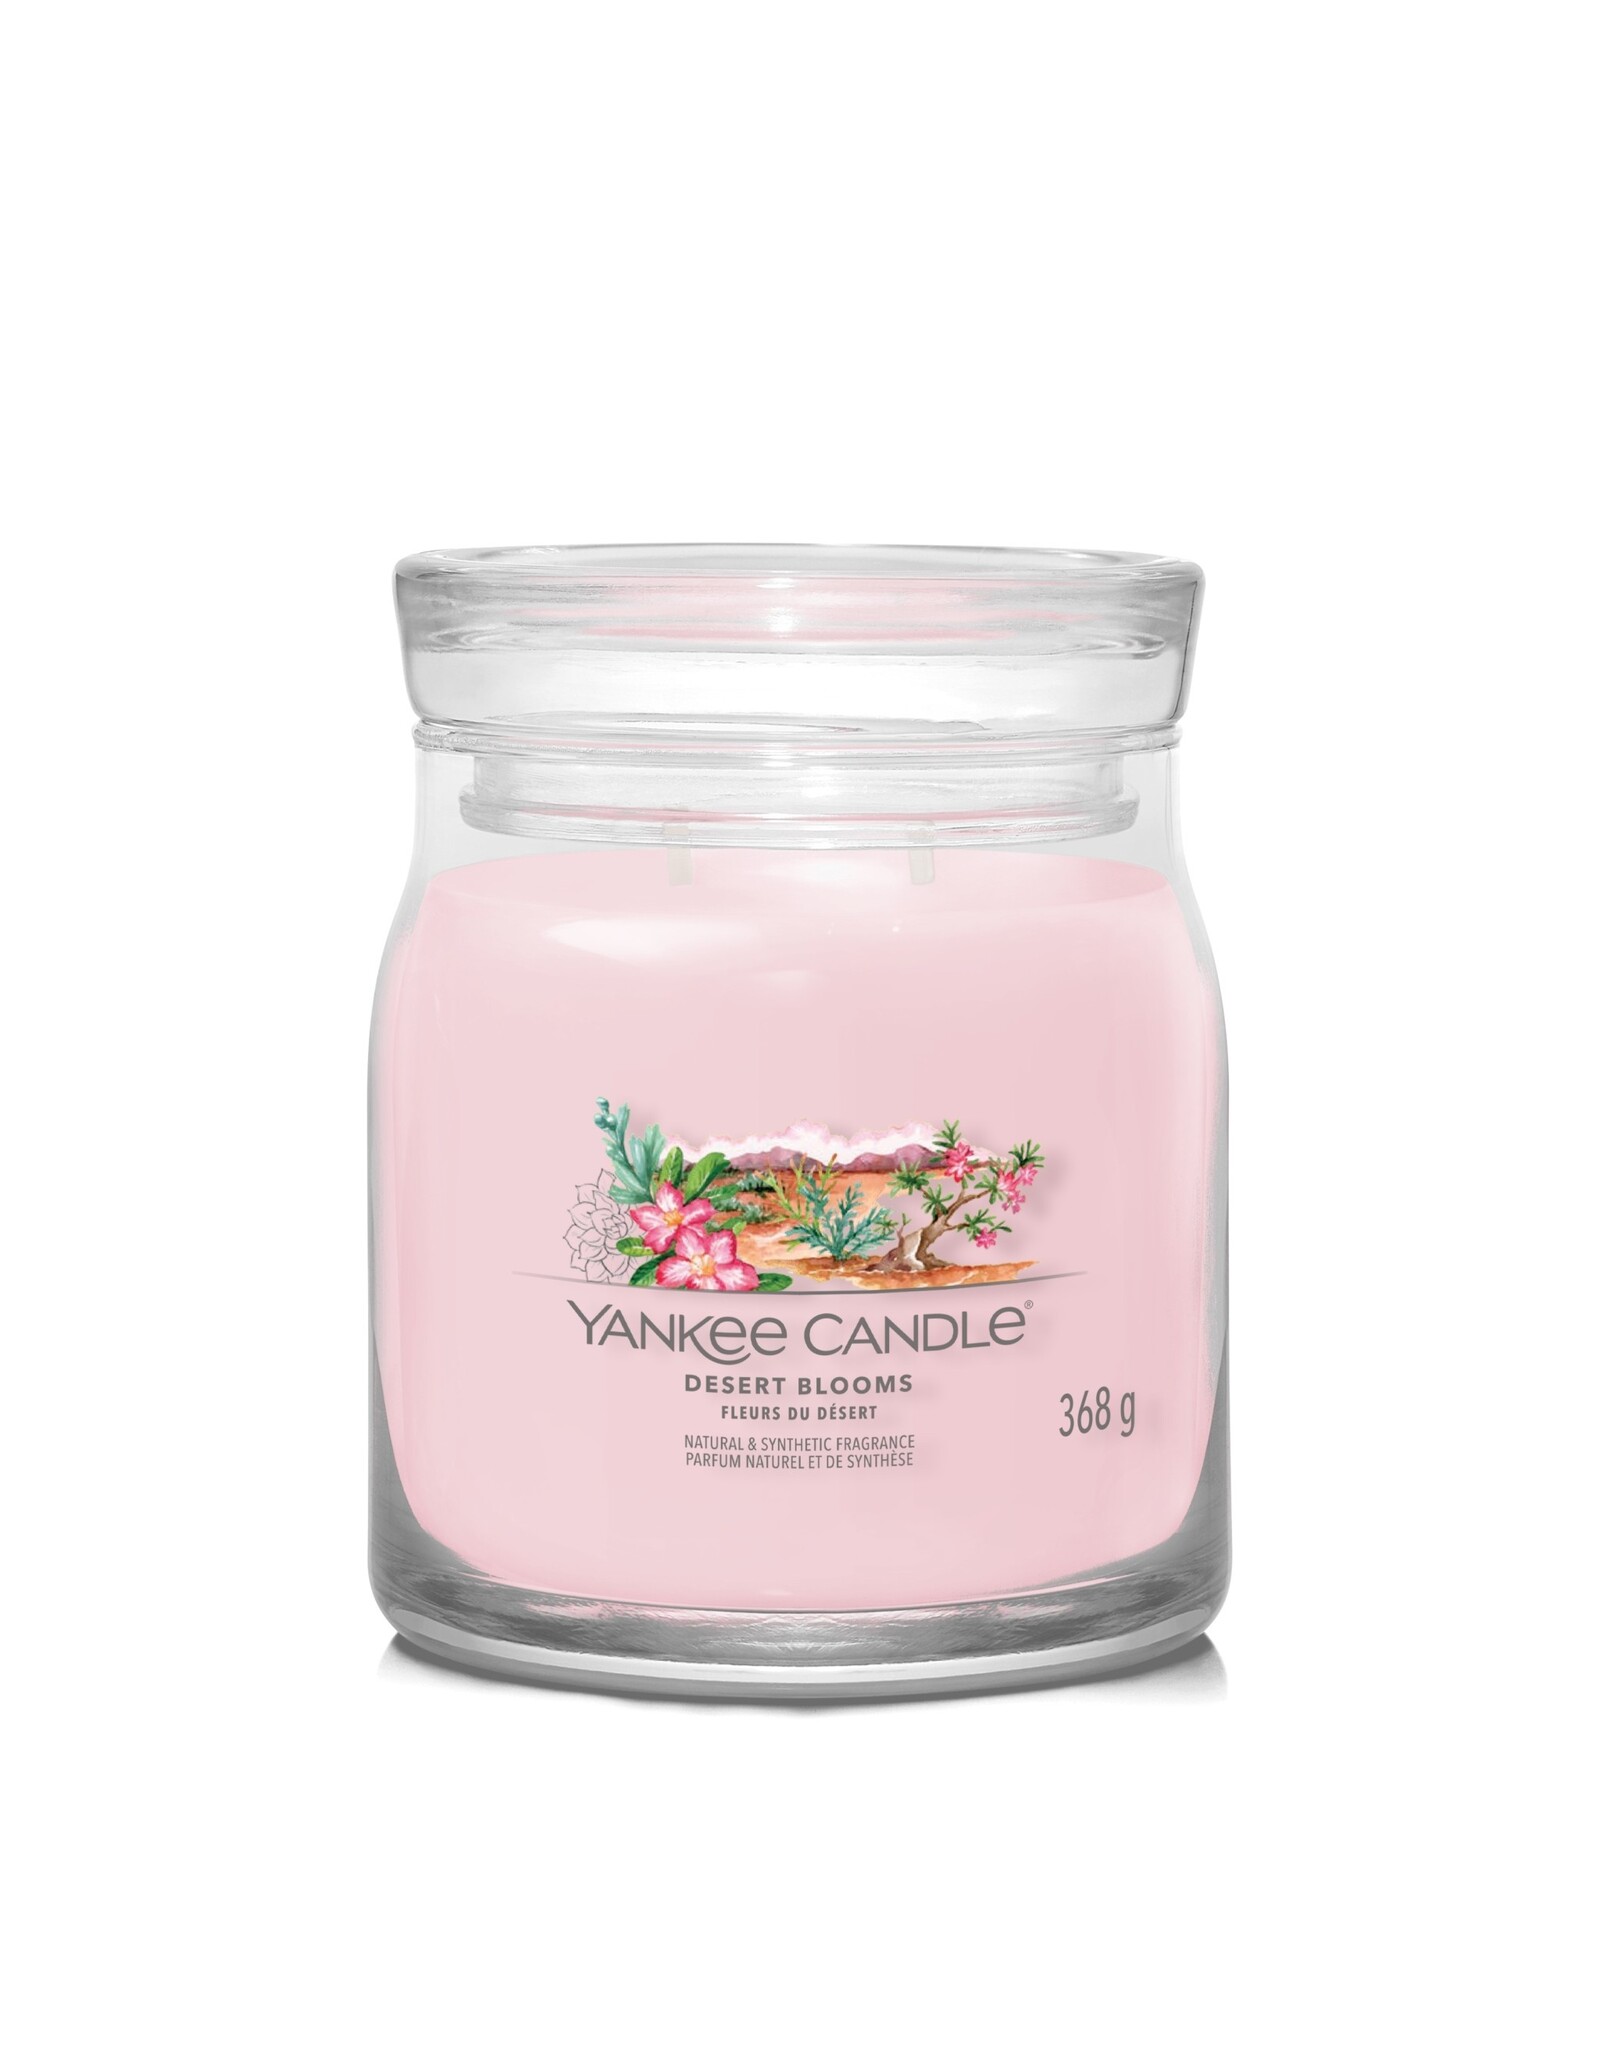 Yankee Candle Desert Blooms - Signature Medium Jar